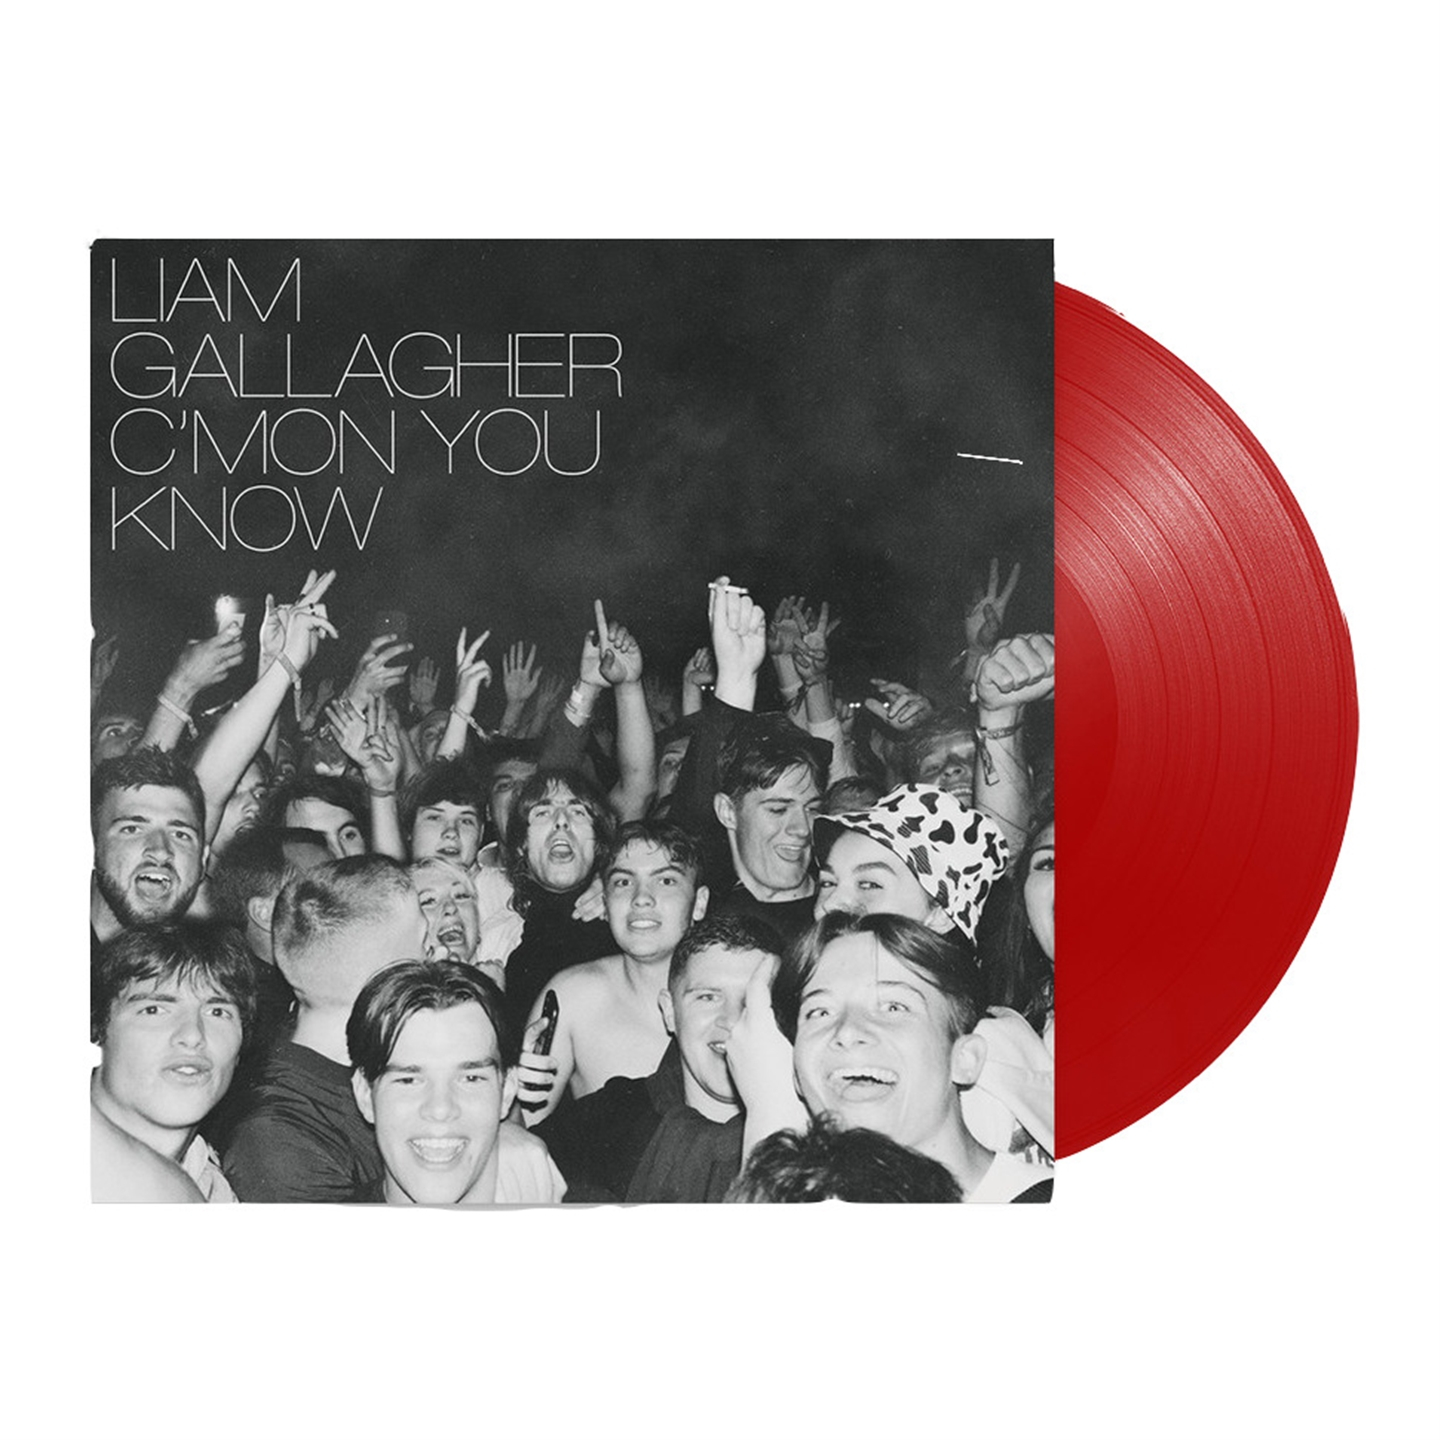 C'Mon You Know Limited Edition Vinile Lp Colorato (Red Vinyl)